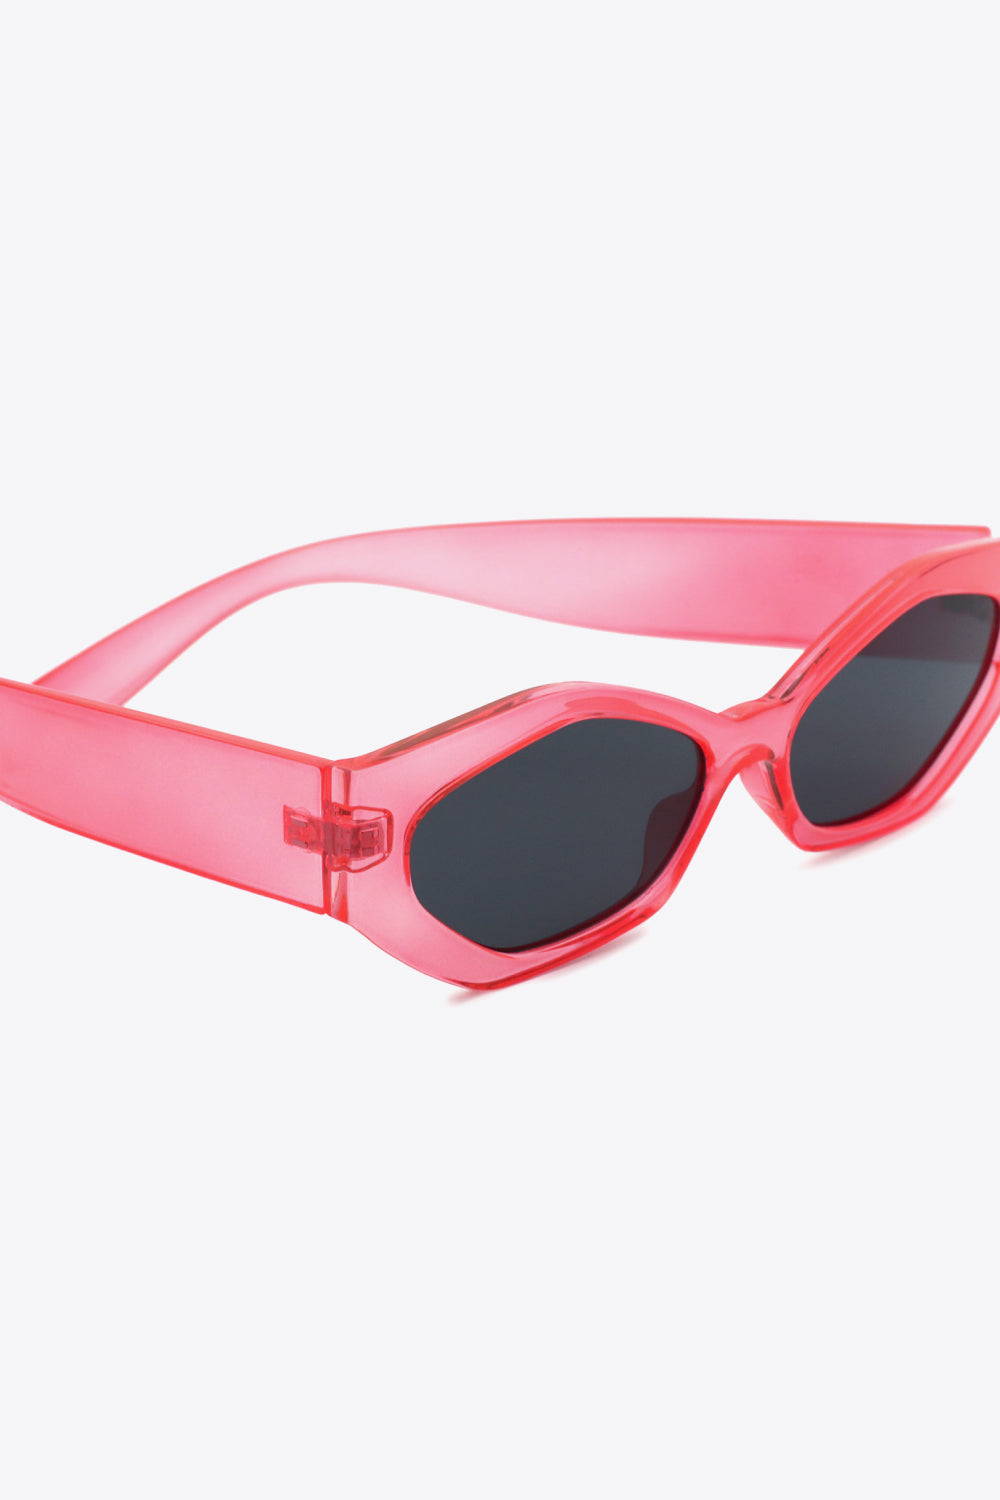 Polycarbonate Frame Wayfarer Sunglasses - AllIn Computer